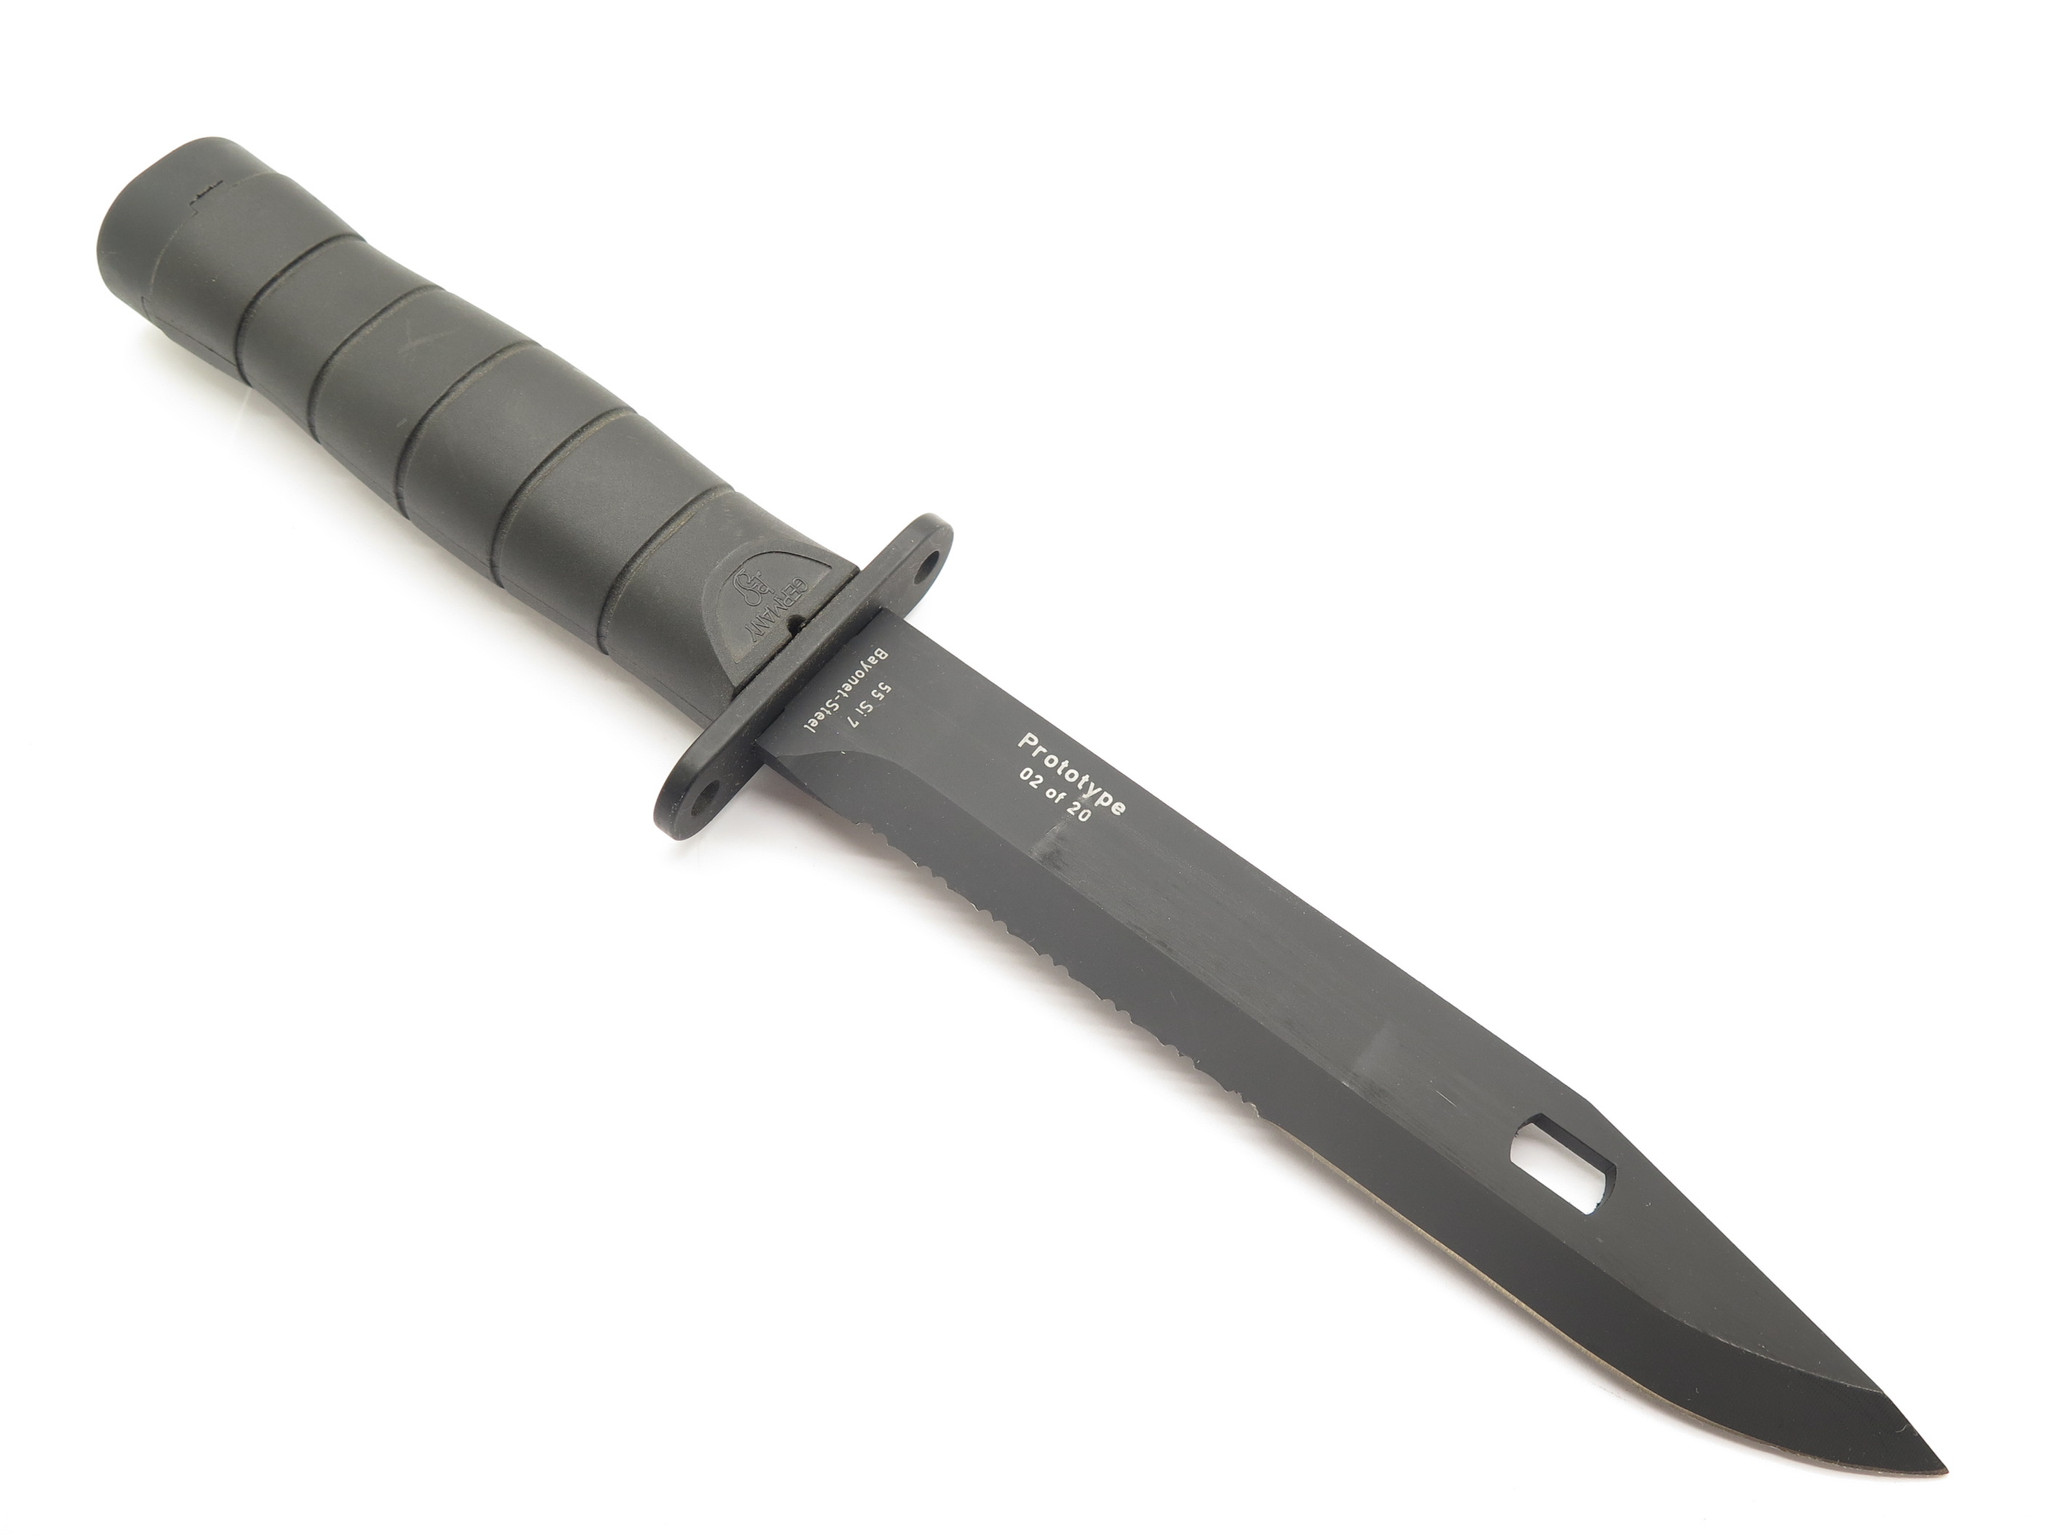 Eickhorn Solingen SEK-P Digicam Police Combat Dagger Knife